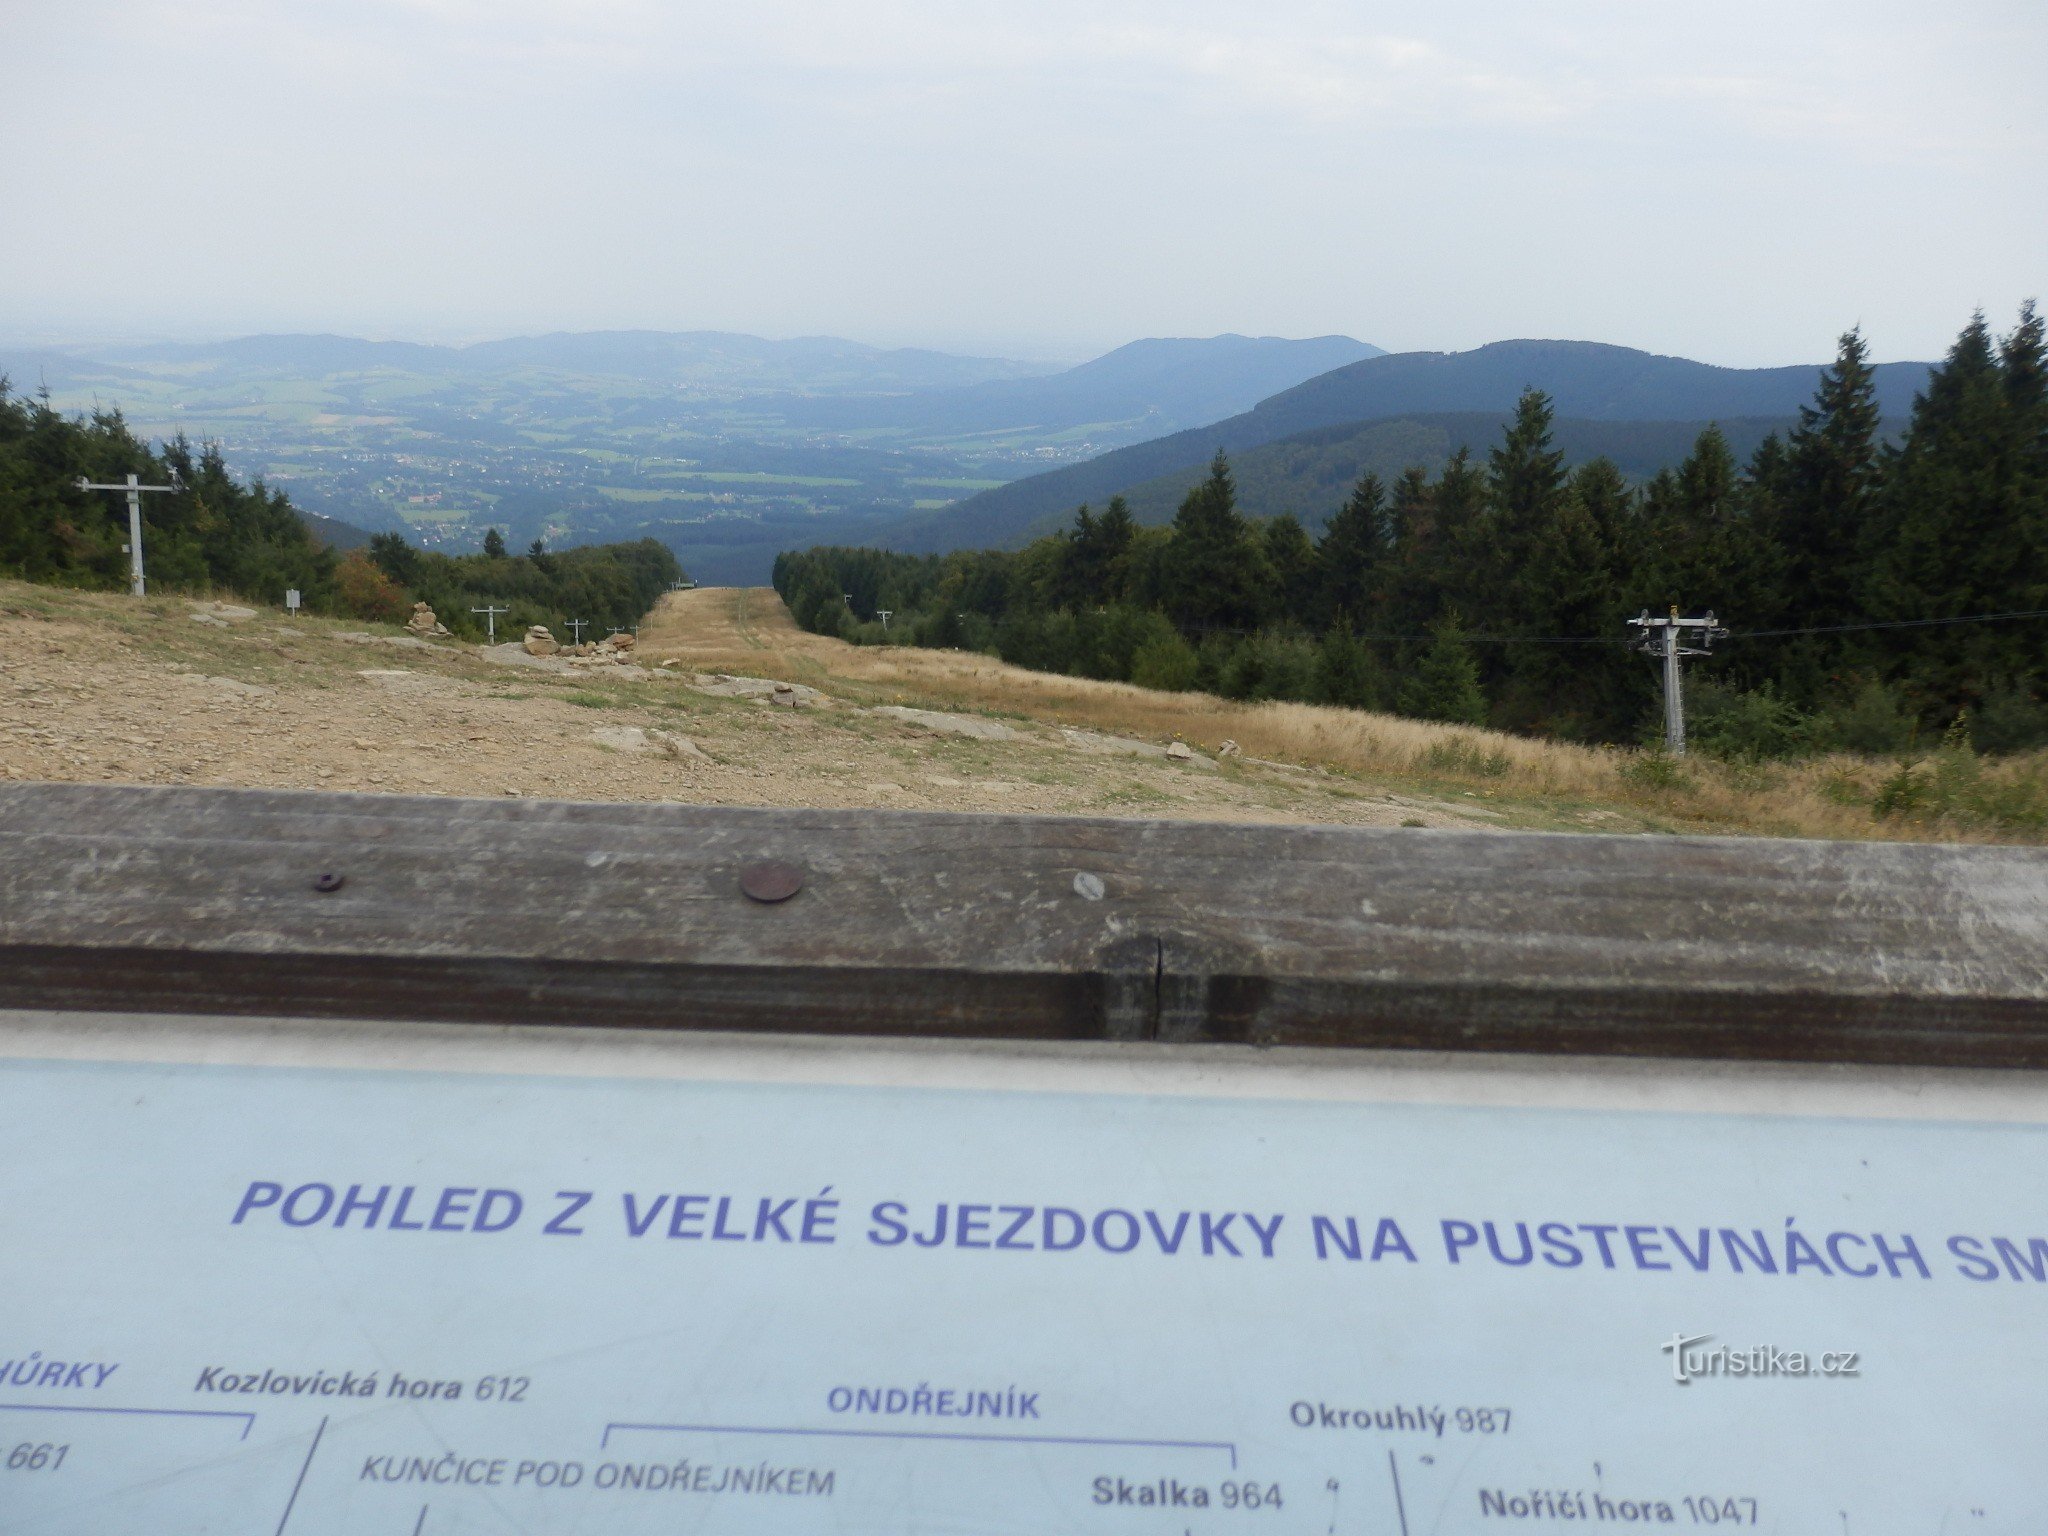 Walk from Pusteven to Radhošť